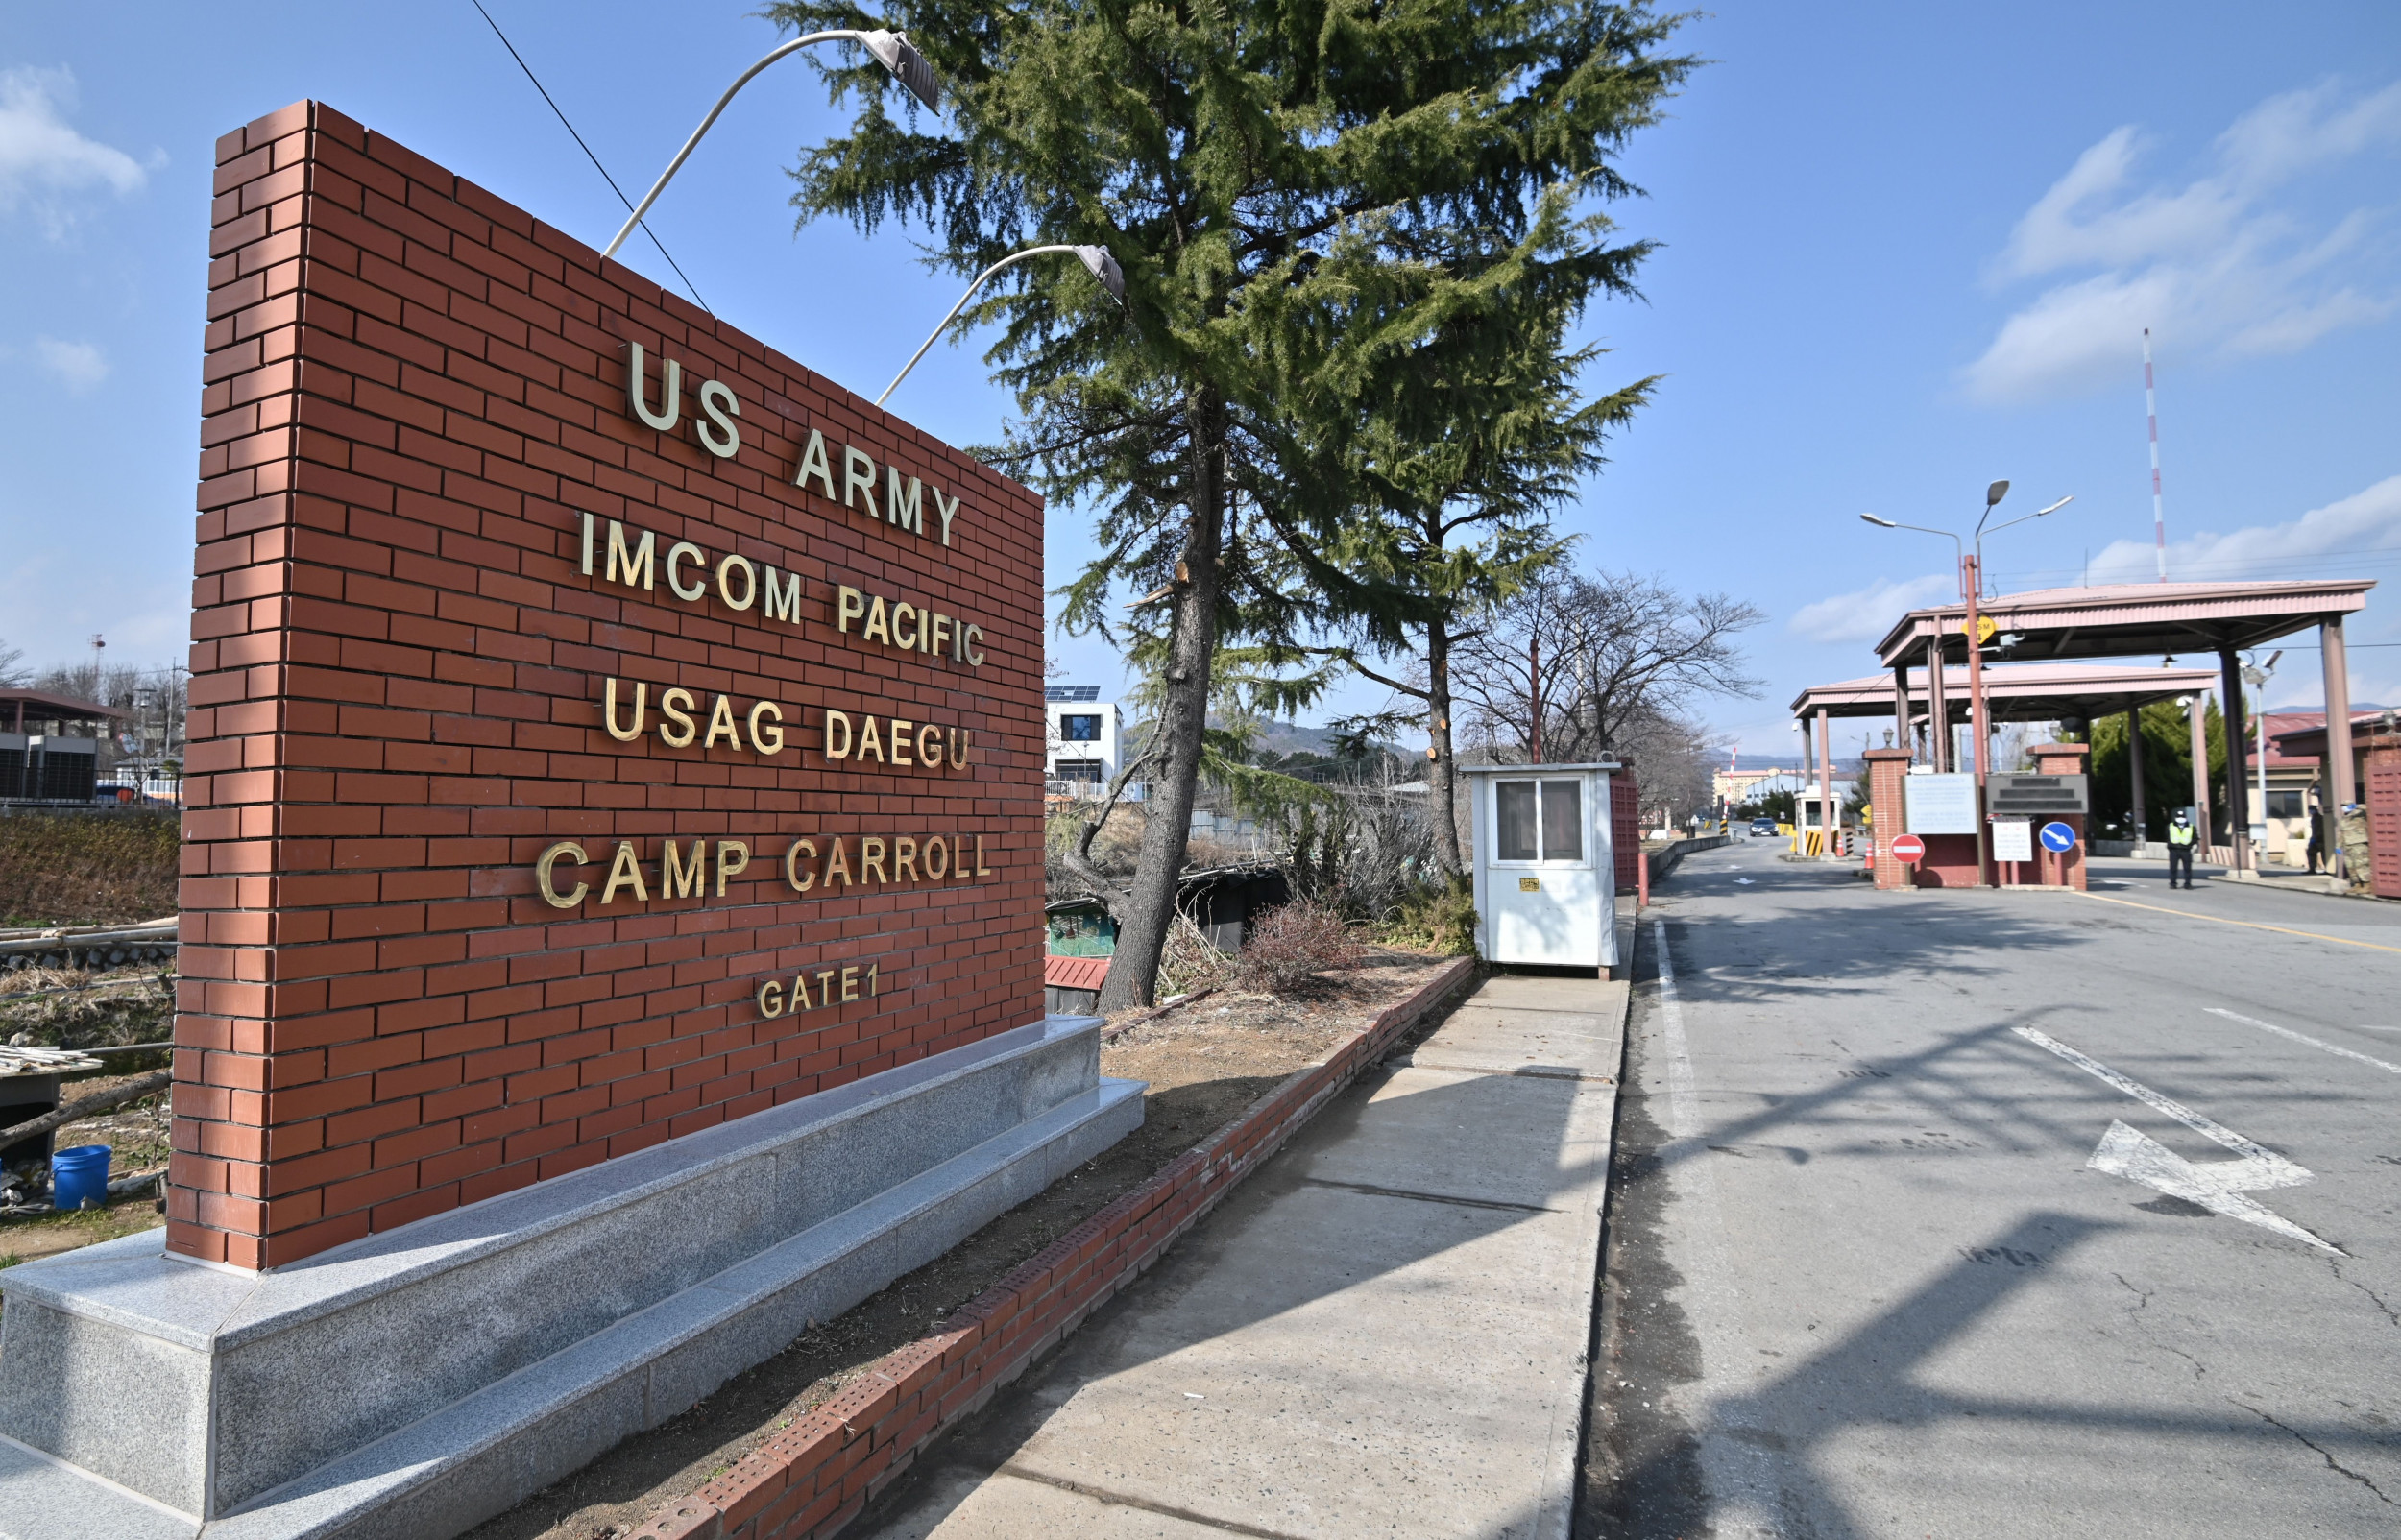 Main gate of US Army Camp Carroll